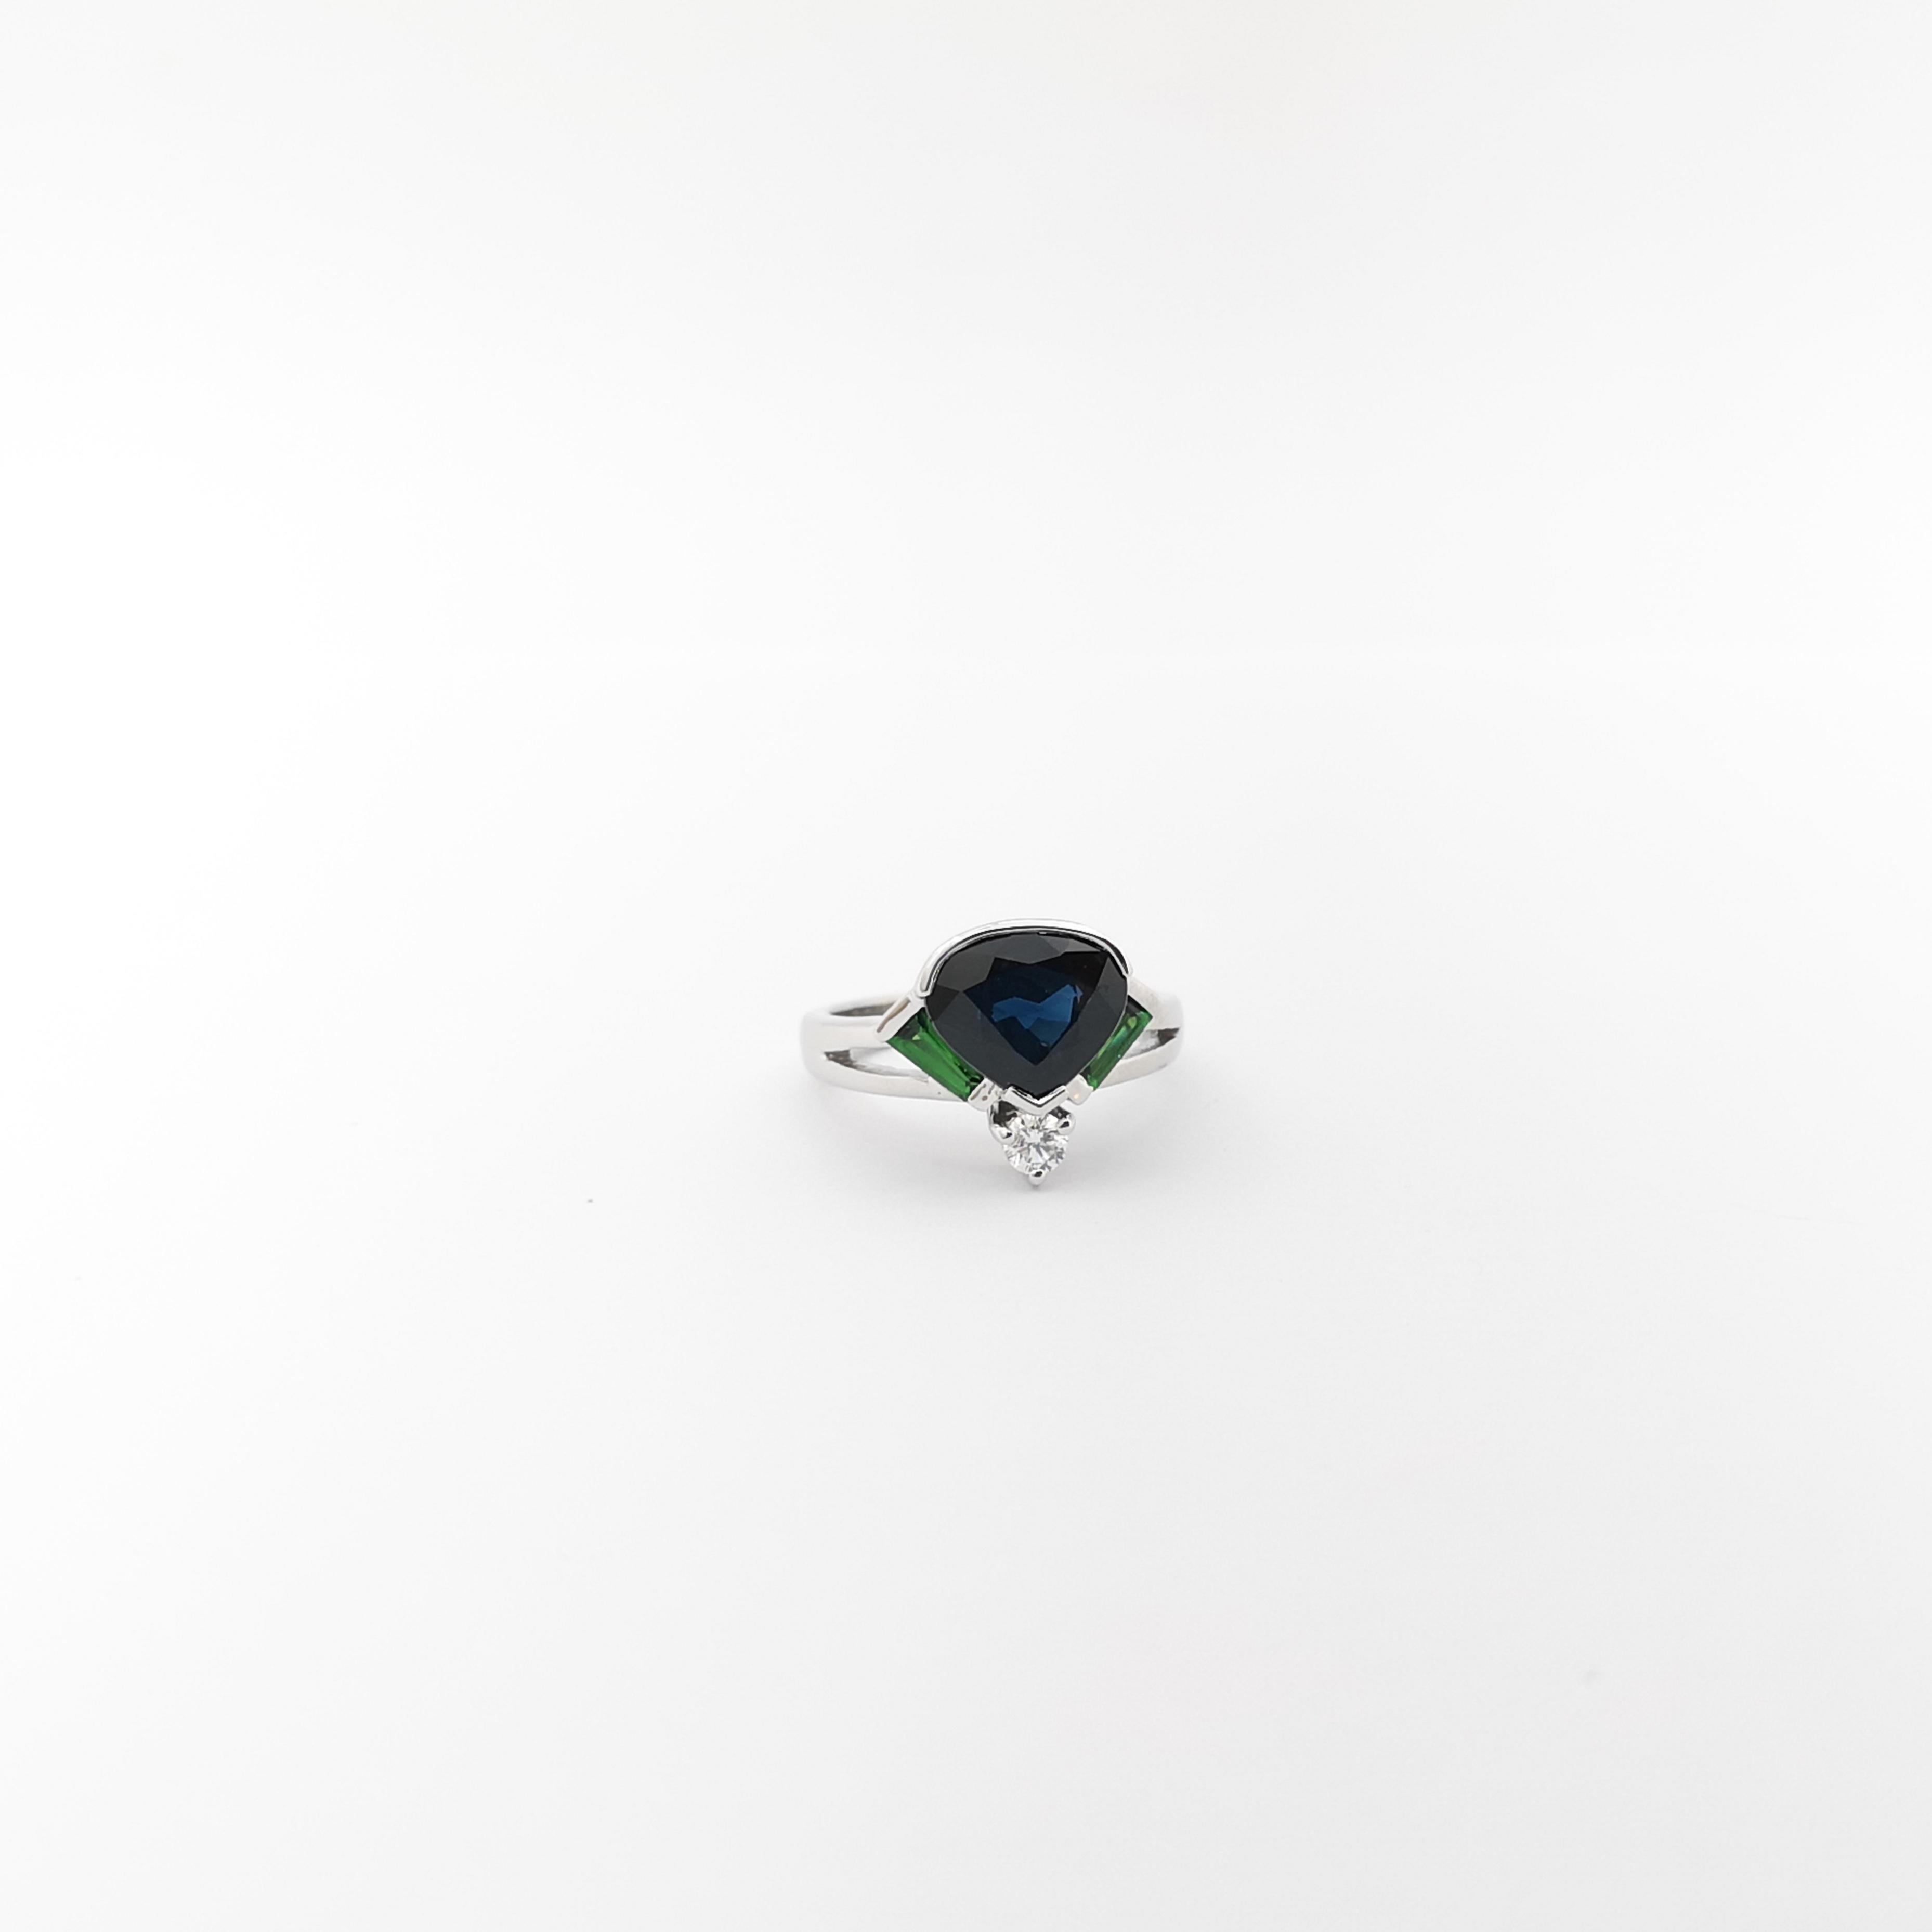 Blue Sapphire, Tsavorite and Diamond Ring set in 18K White Gold Settings For Sale 2